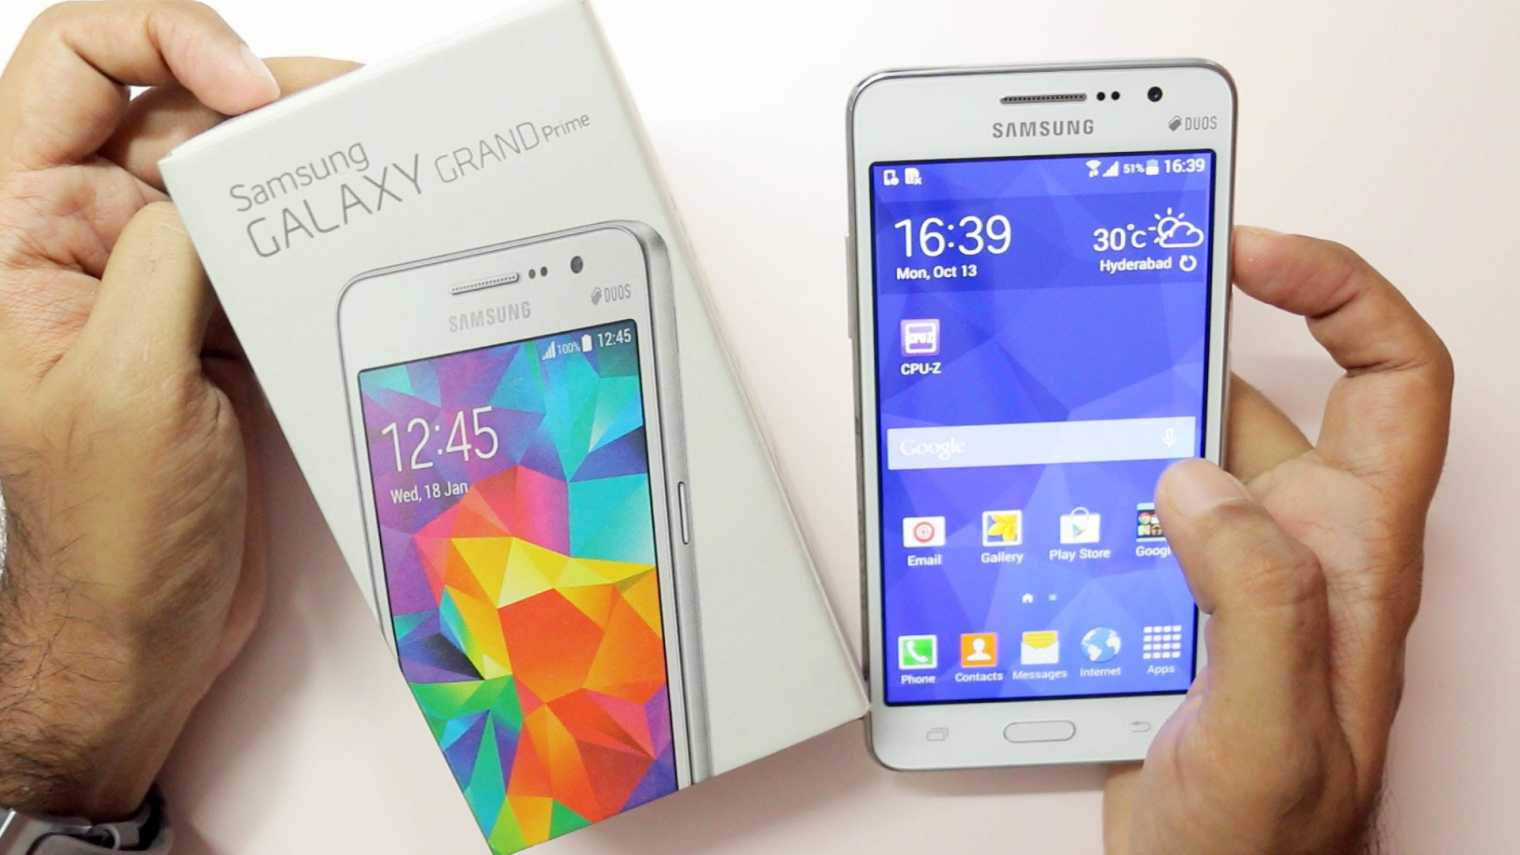 Samsung-Galaxy-Grand-Prime-Mobile-Phone best price bd